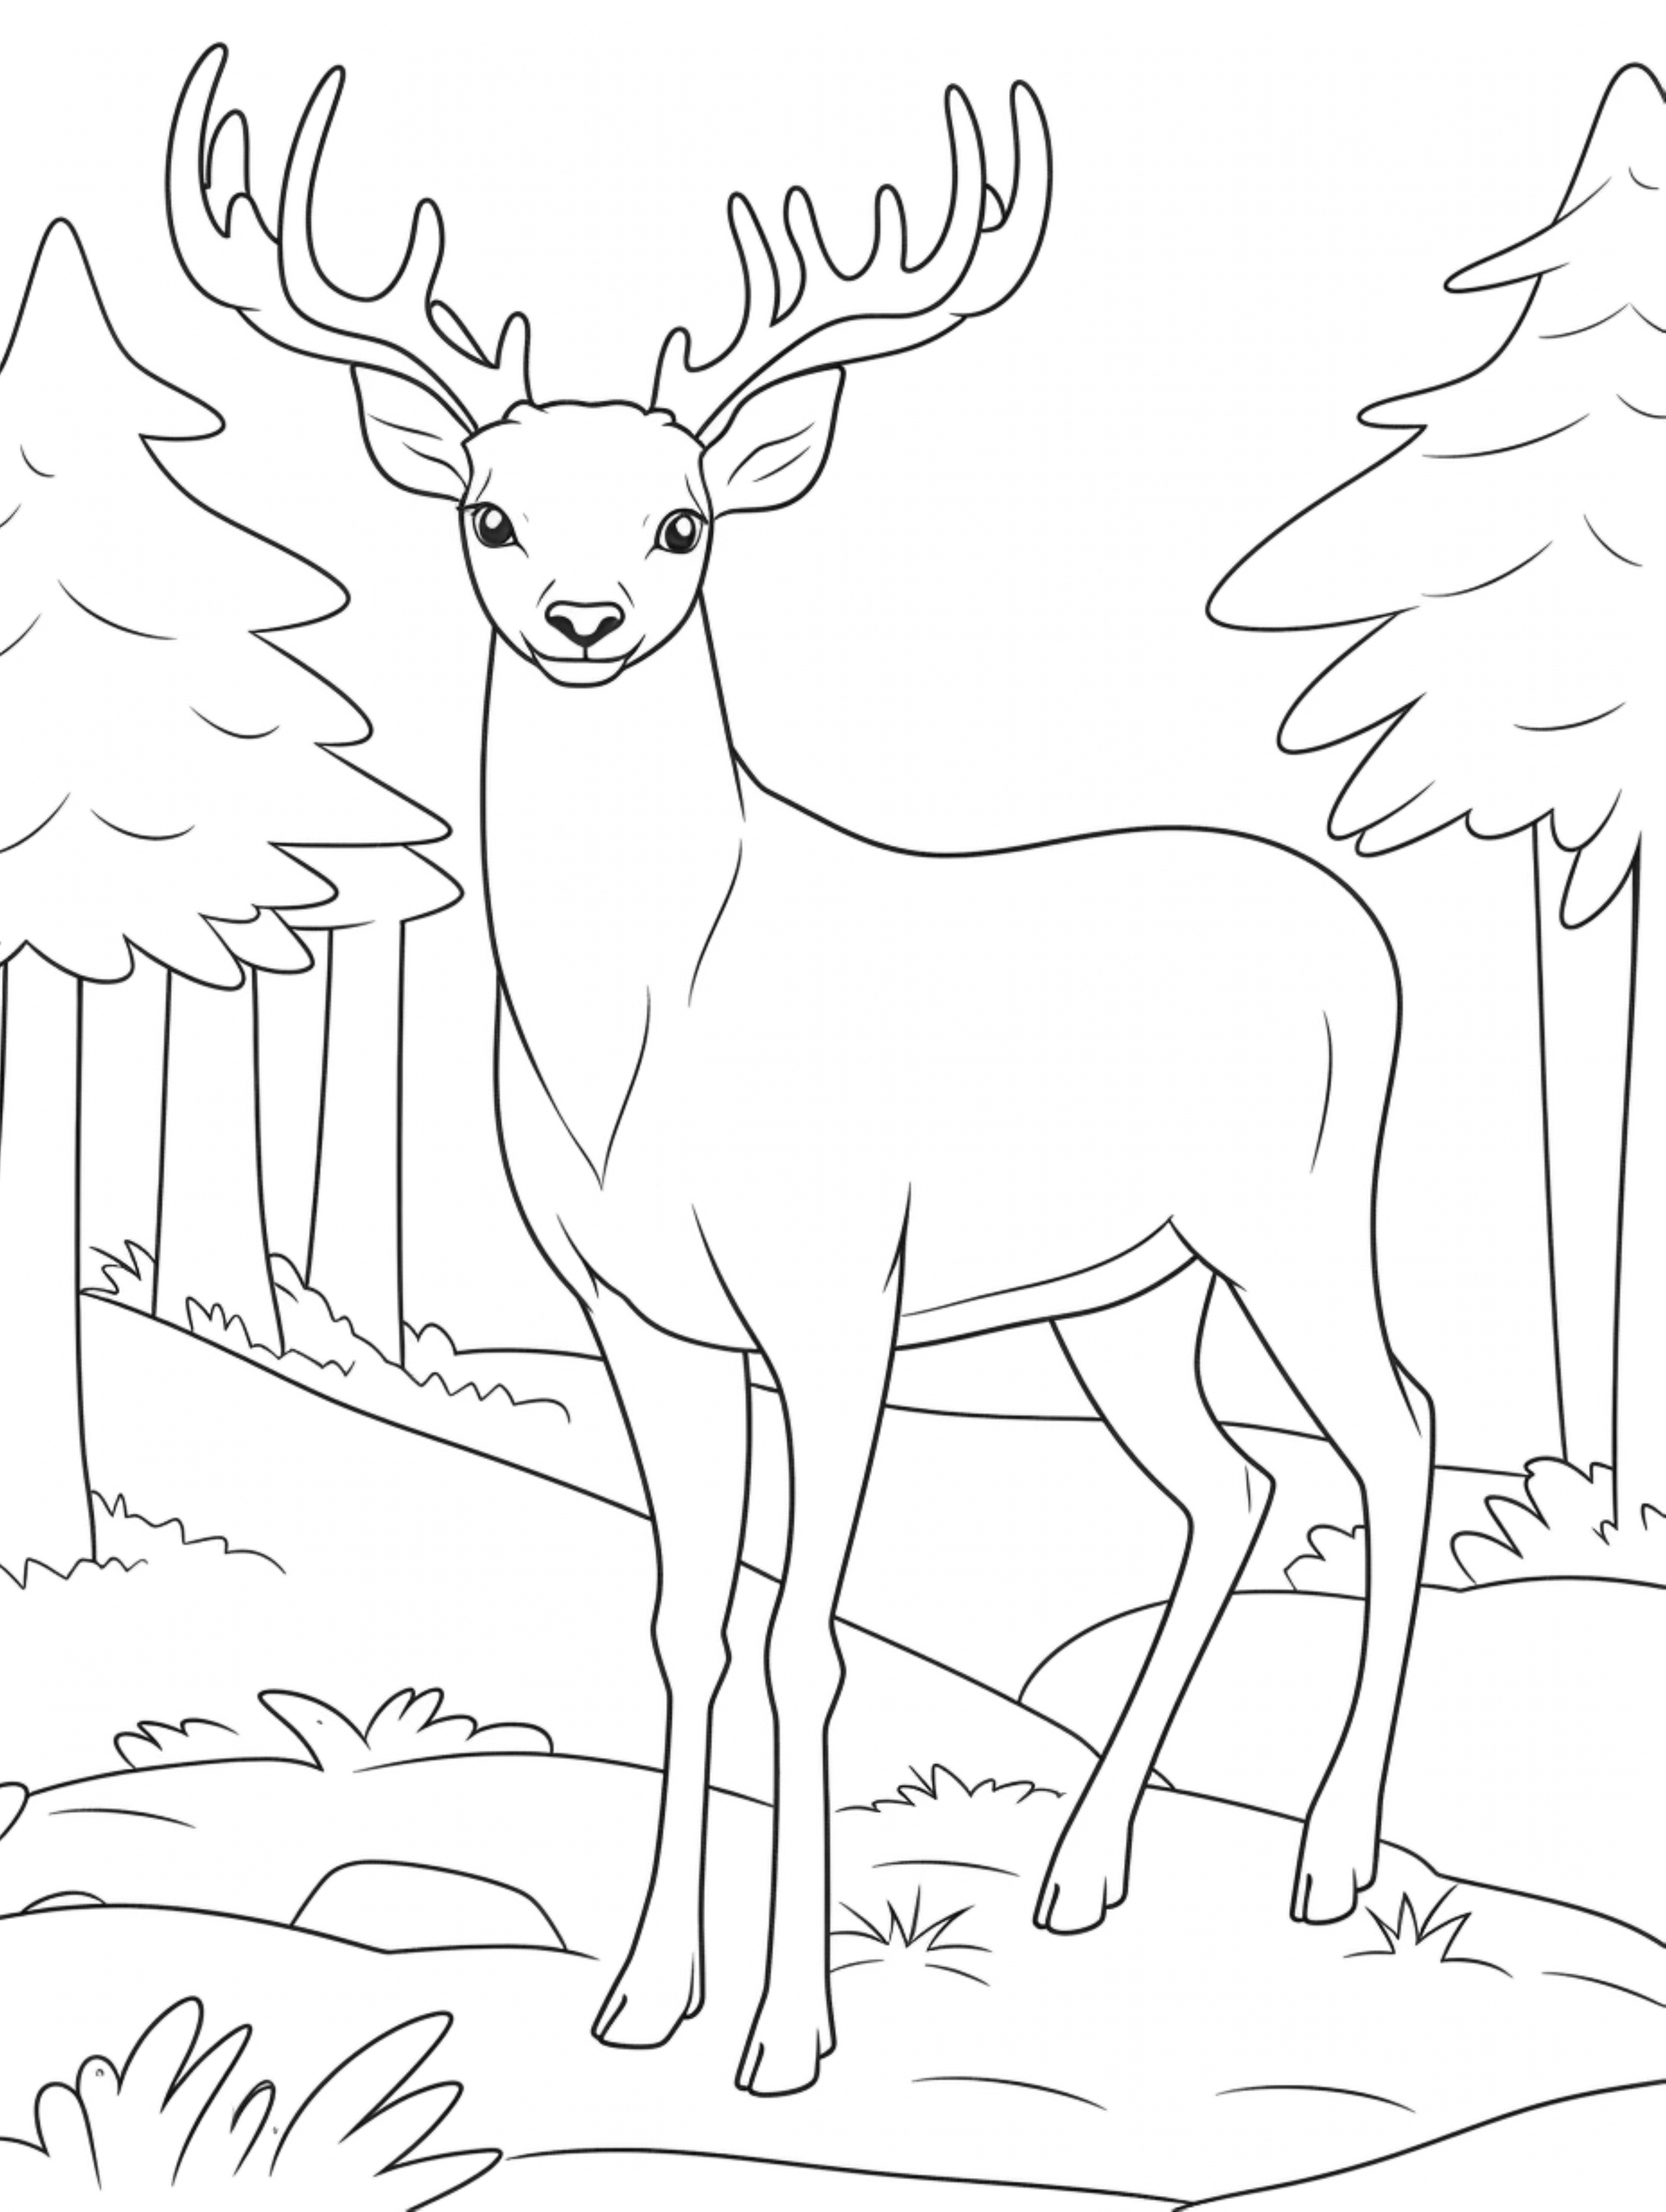 elk coloring page